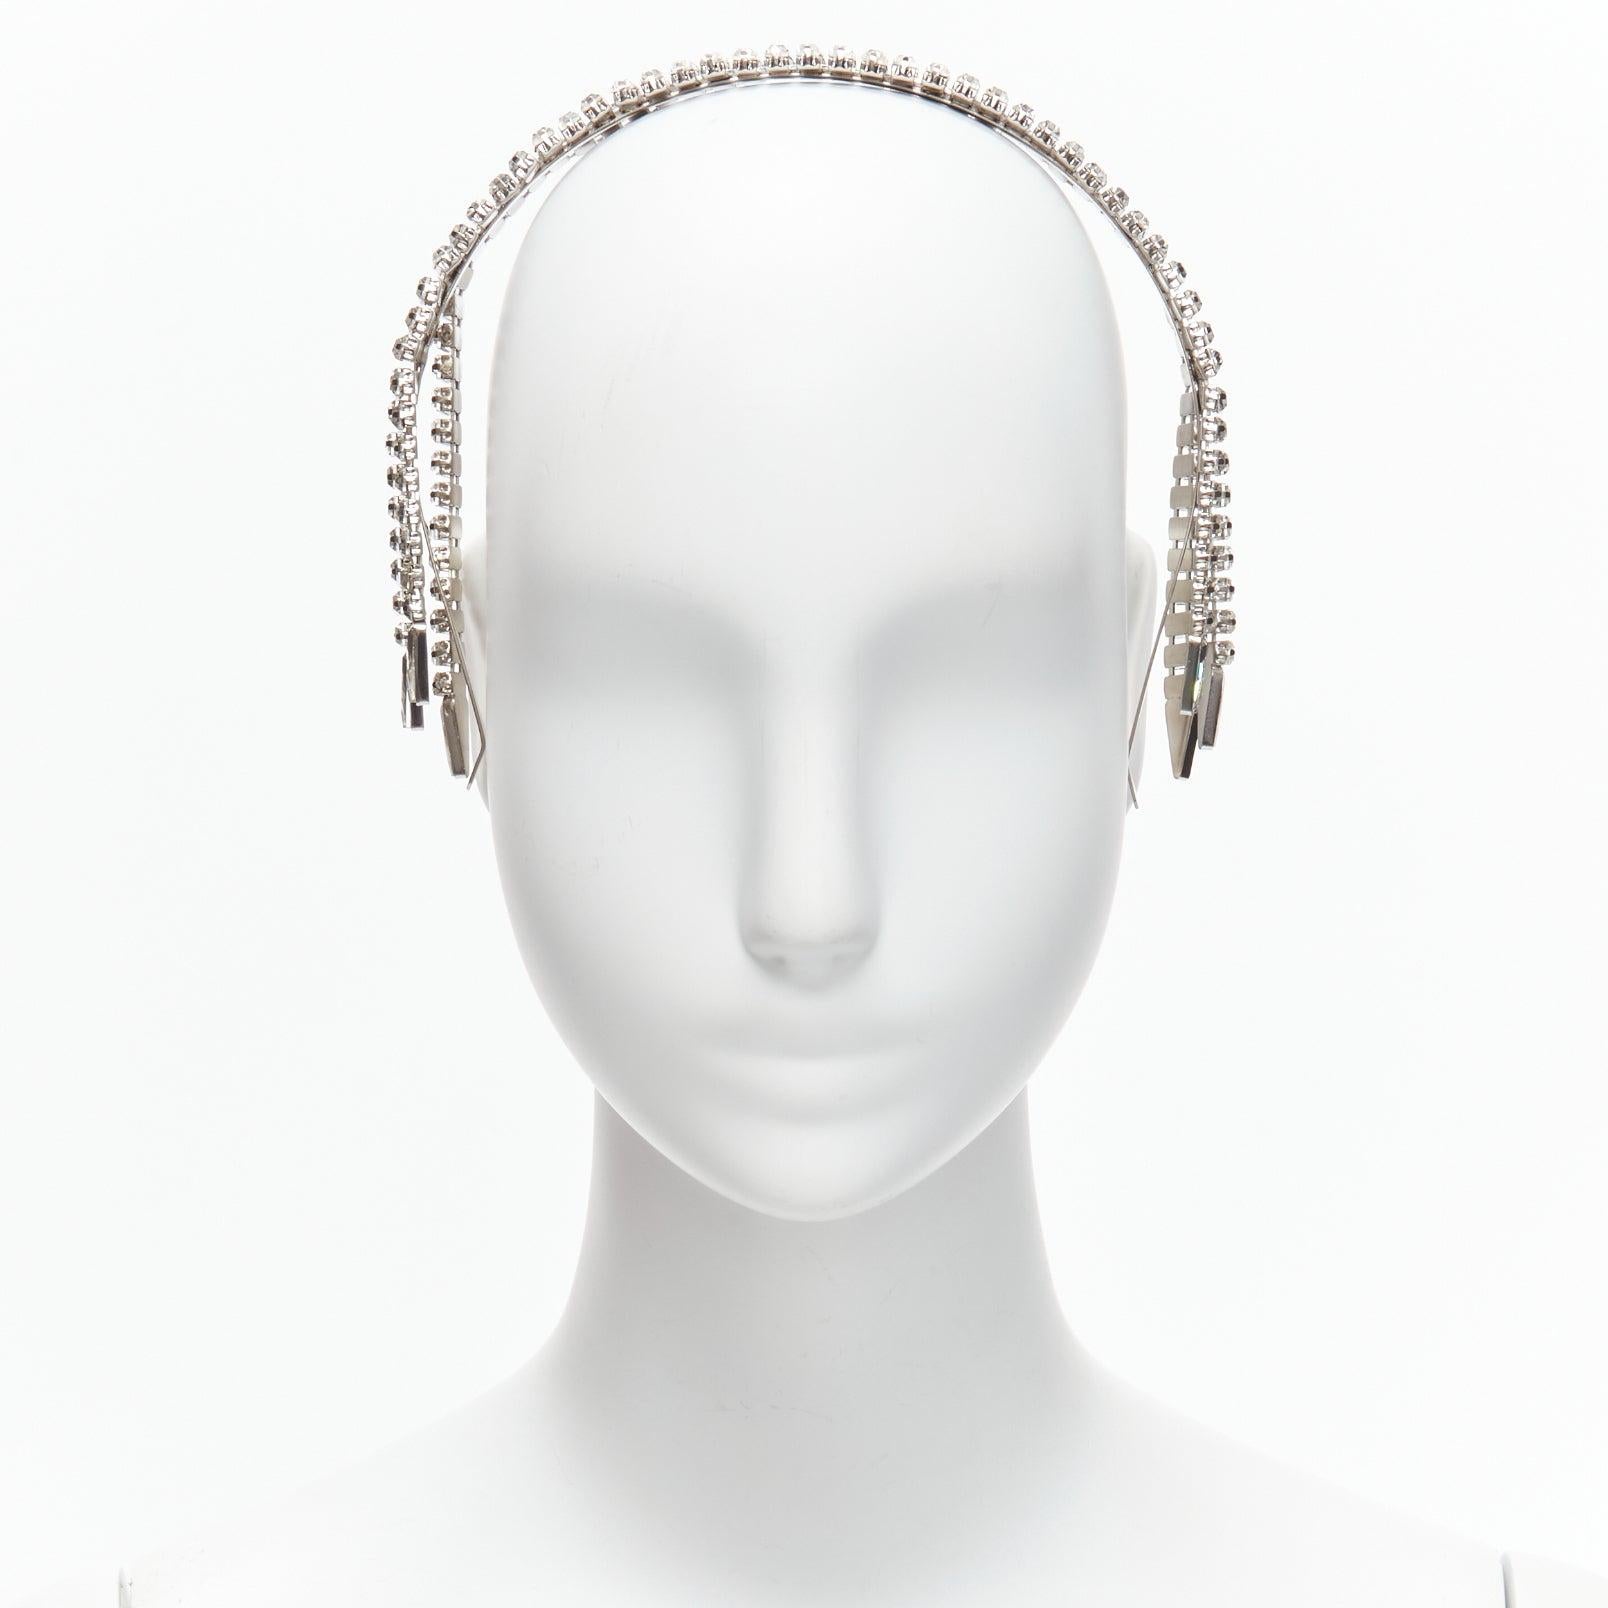 Seltenes kaskadenförmiges GUCCI Alessandro Michele GG Logo-Kopfband aus Kristall (Grau) im Angebot